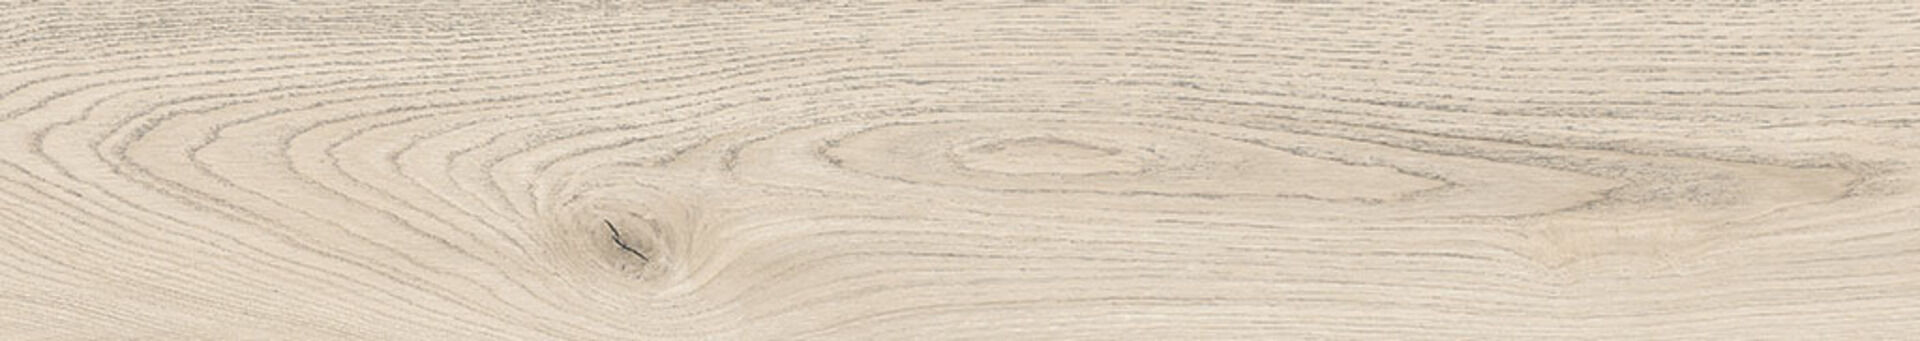 Керамогранит Gravita Dakota White Oak Carving 20x120 керамогранит gravita caldera white 20x120